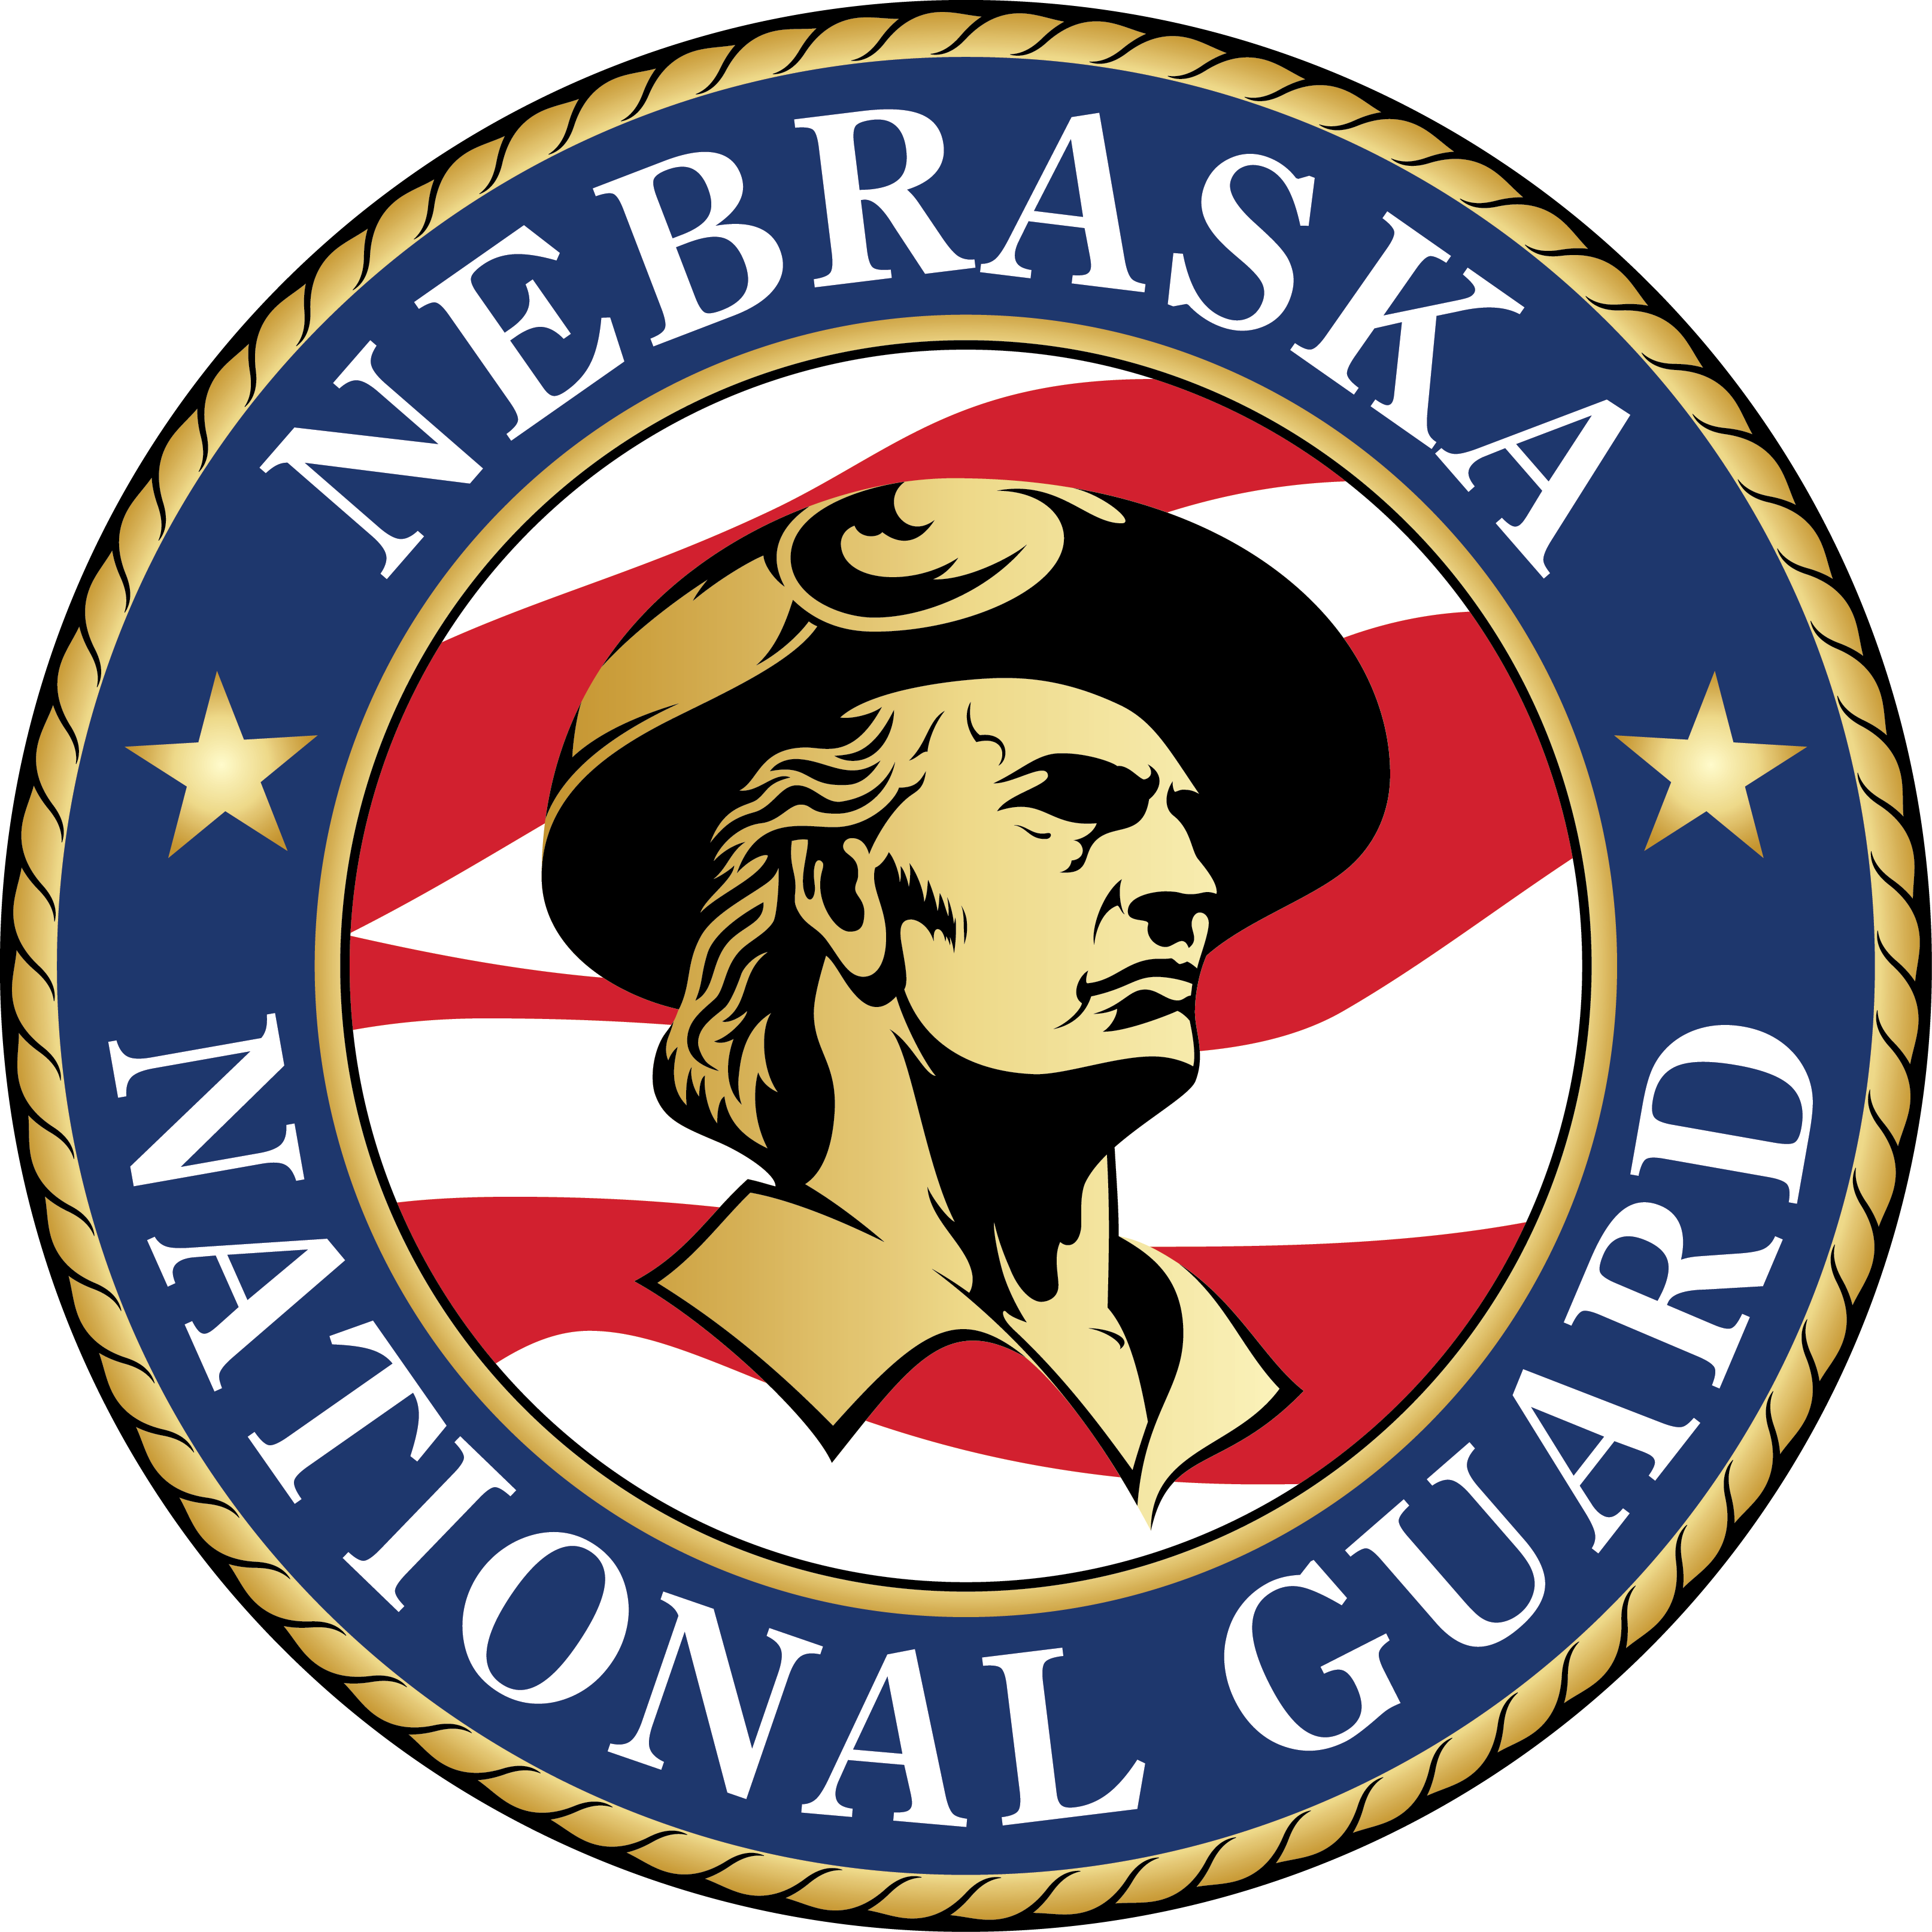 Nebraska National Guard